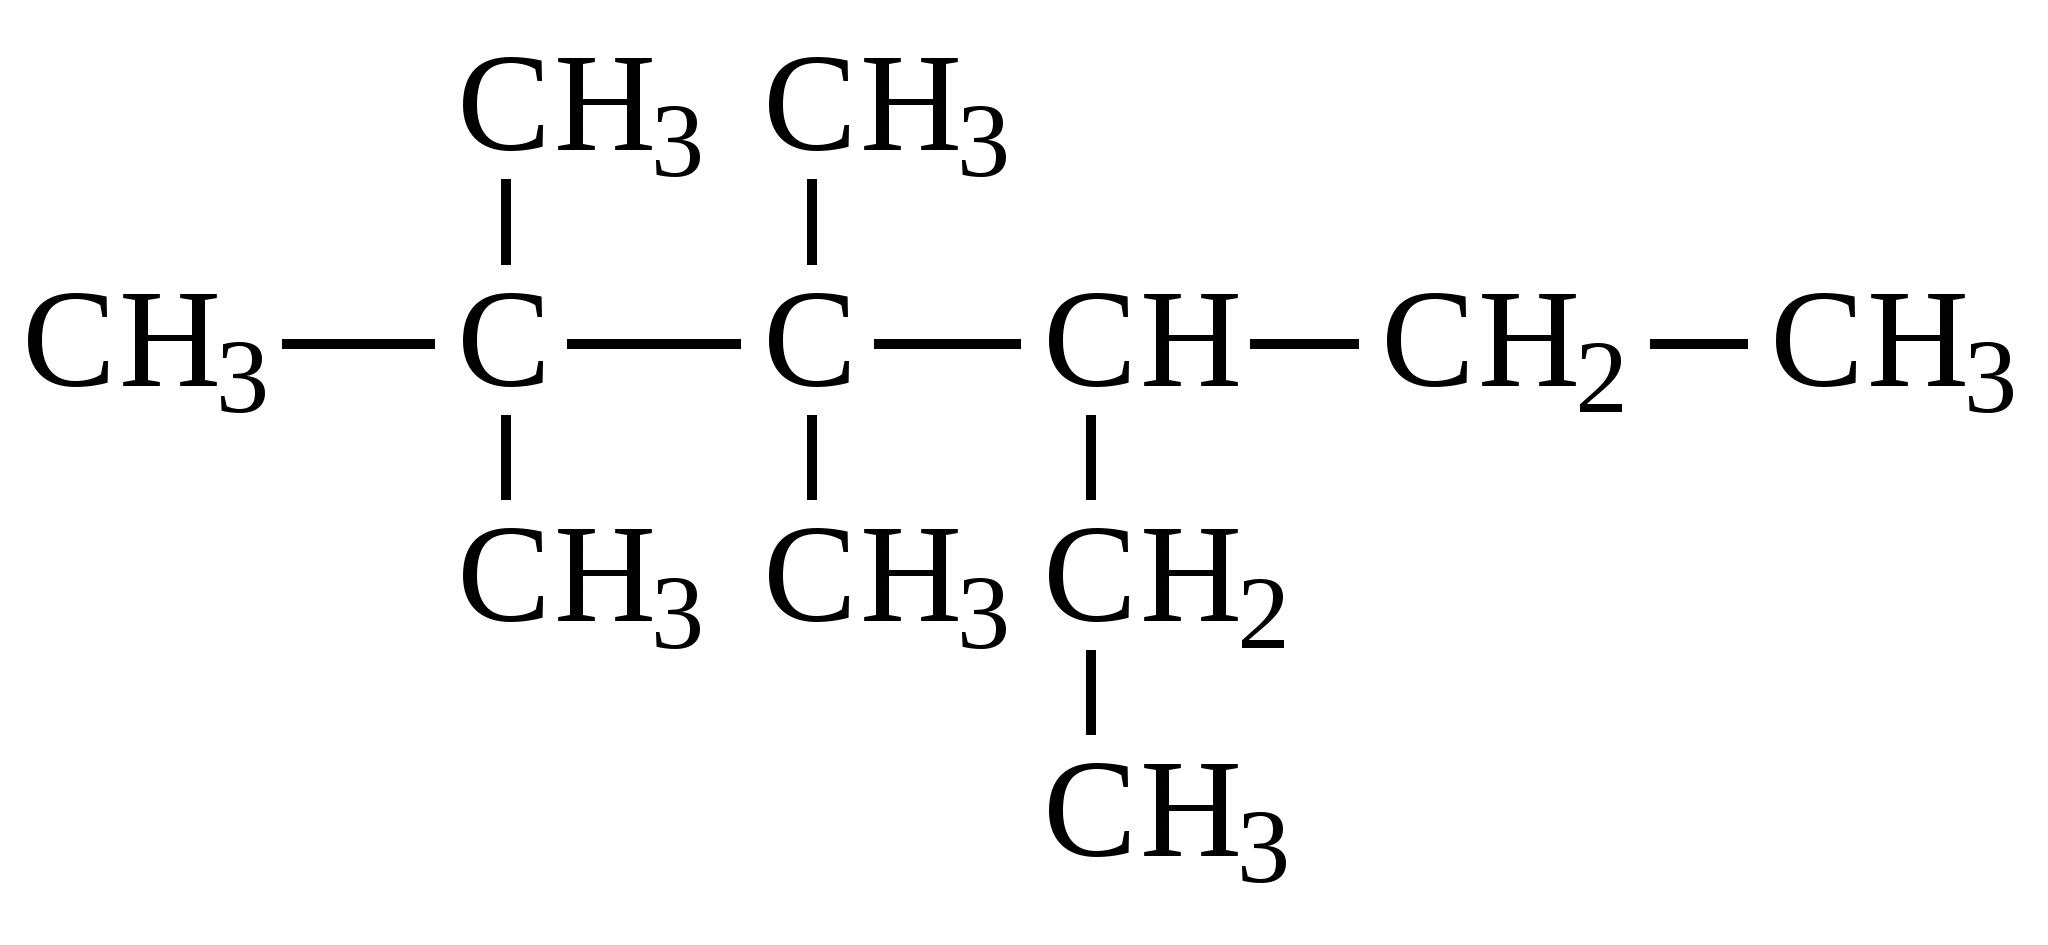 4 этил гексан. Алканы структурная формула. Структурная формула алкенов. Алкены структурные формулы. Структурные формулы алканов.